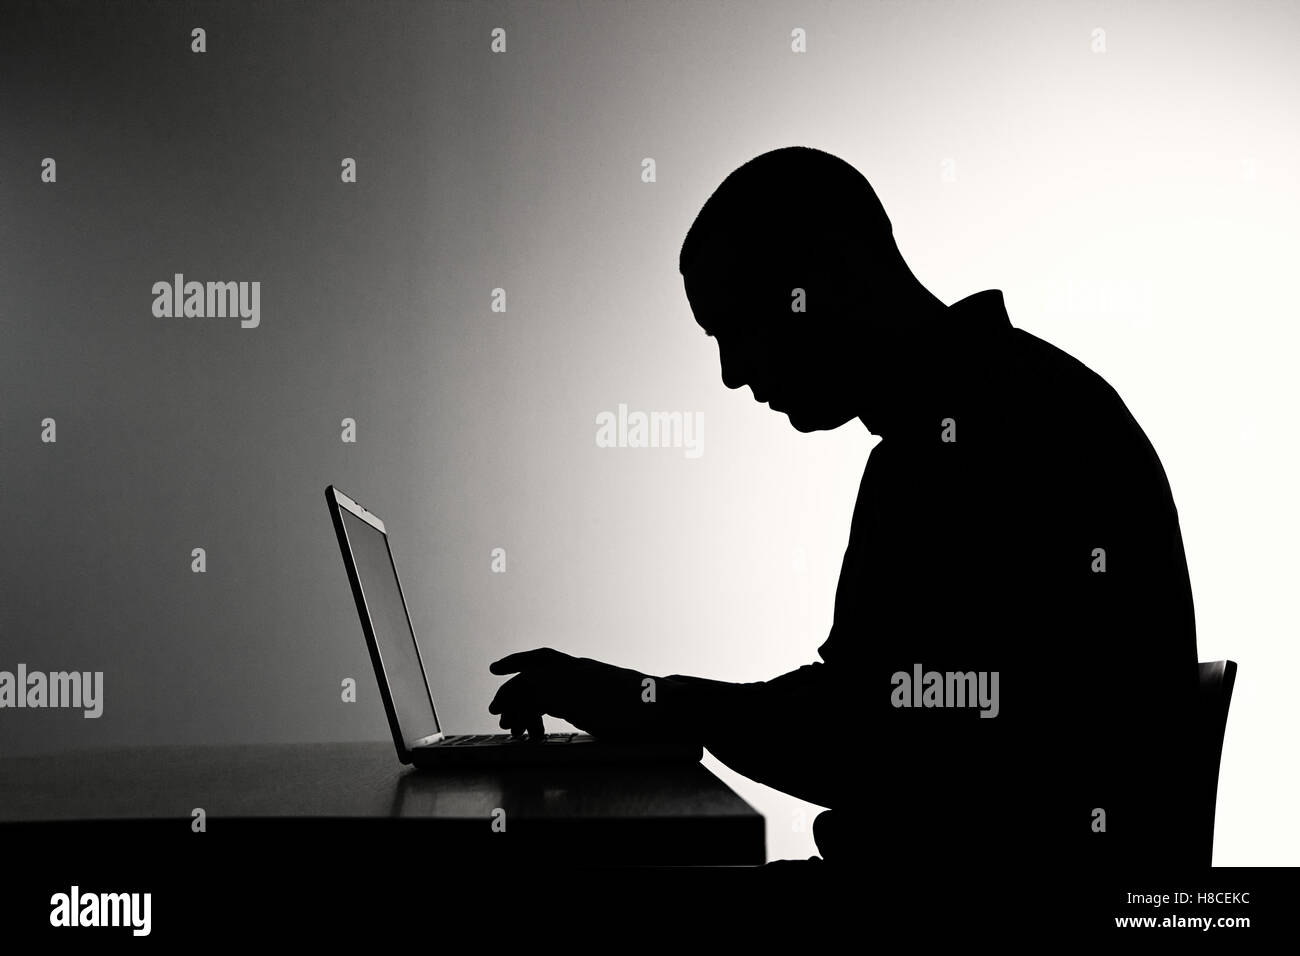 hacker criminal dark web code malware exploit ddos attack infect silhouette contrast Stock Photo